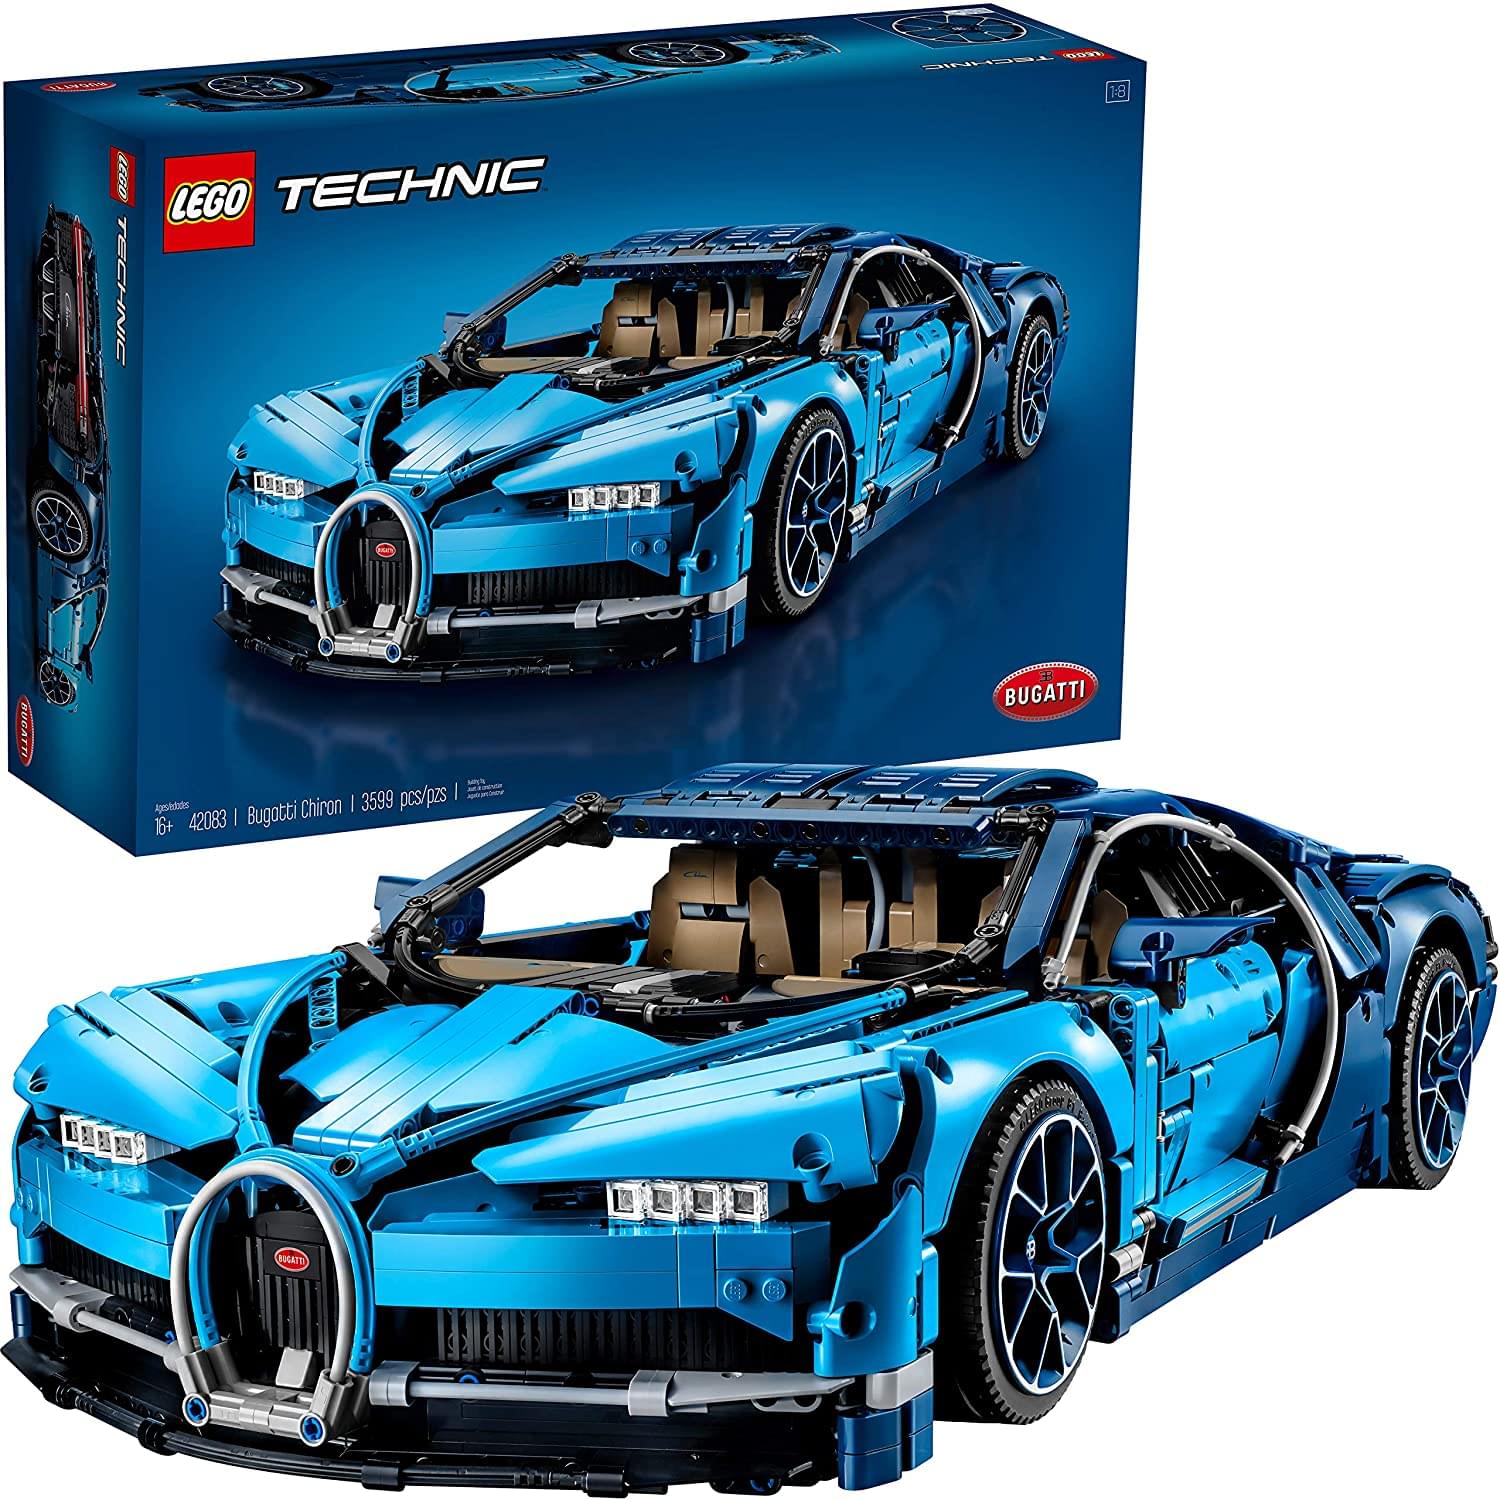 LEGO Technic Bugatti Chiron 3599 Piece Building Kit